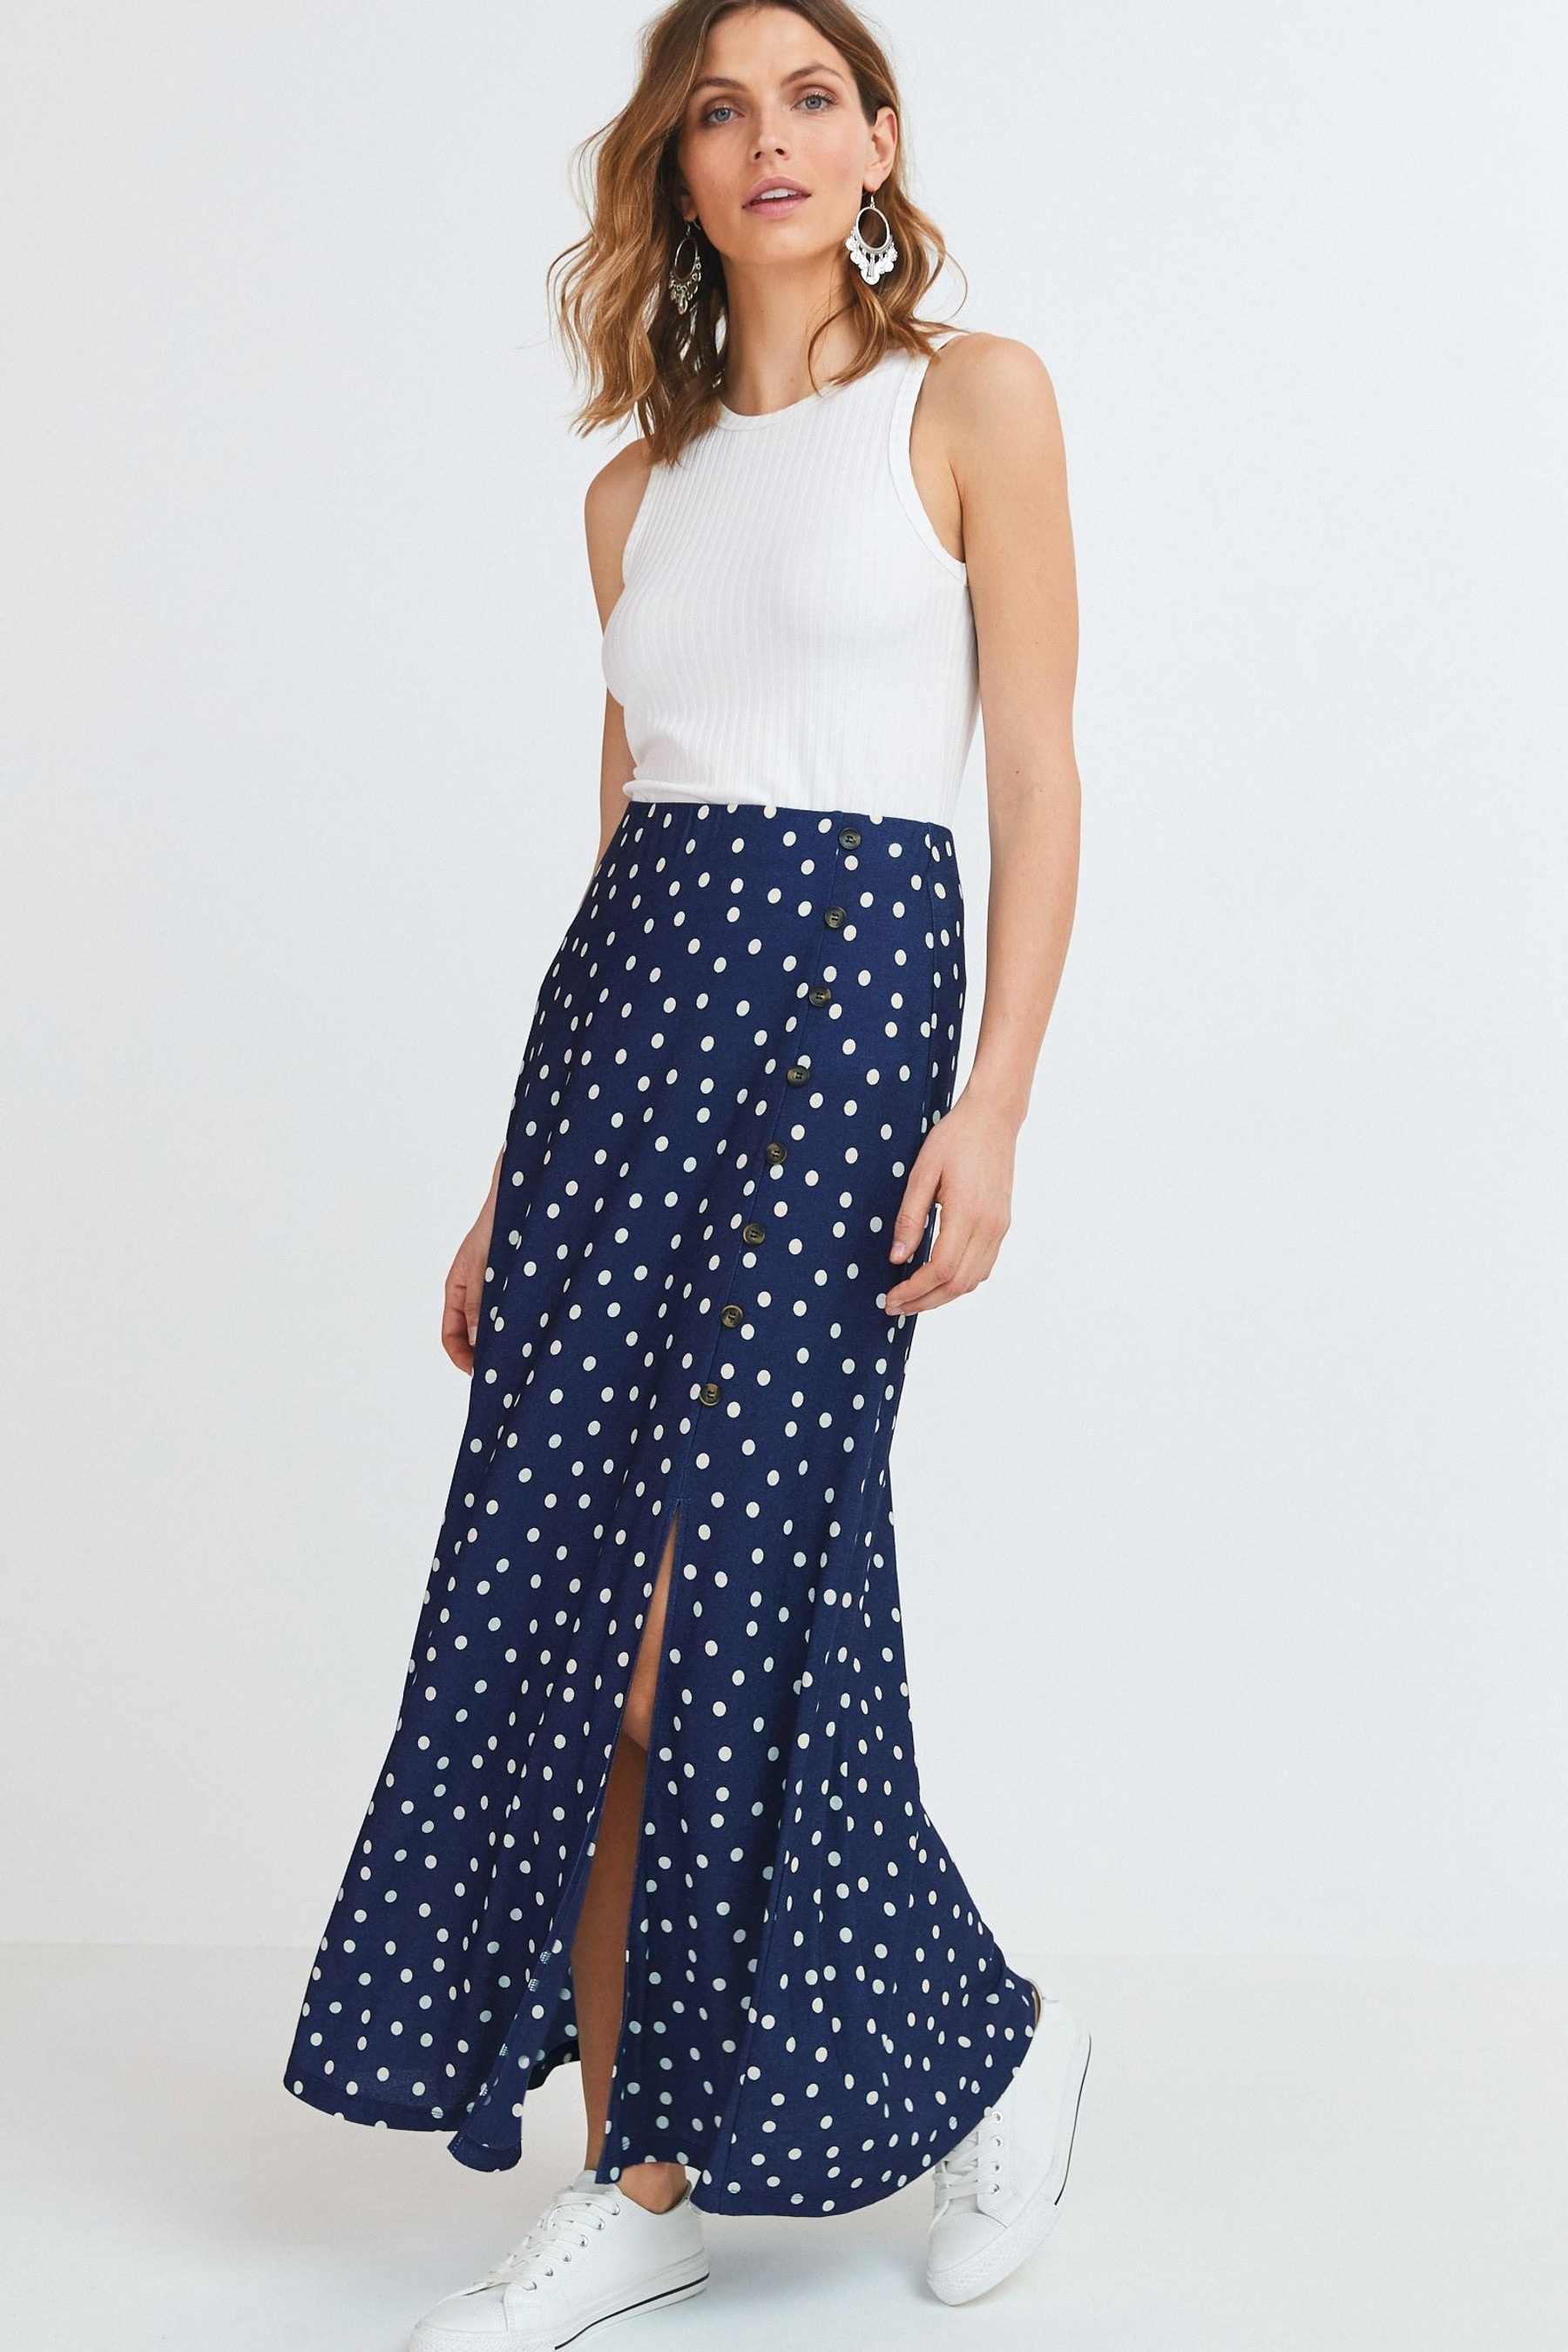 Buy Navy Spot Jersey Maxi Skirt from the Next UK online shop